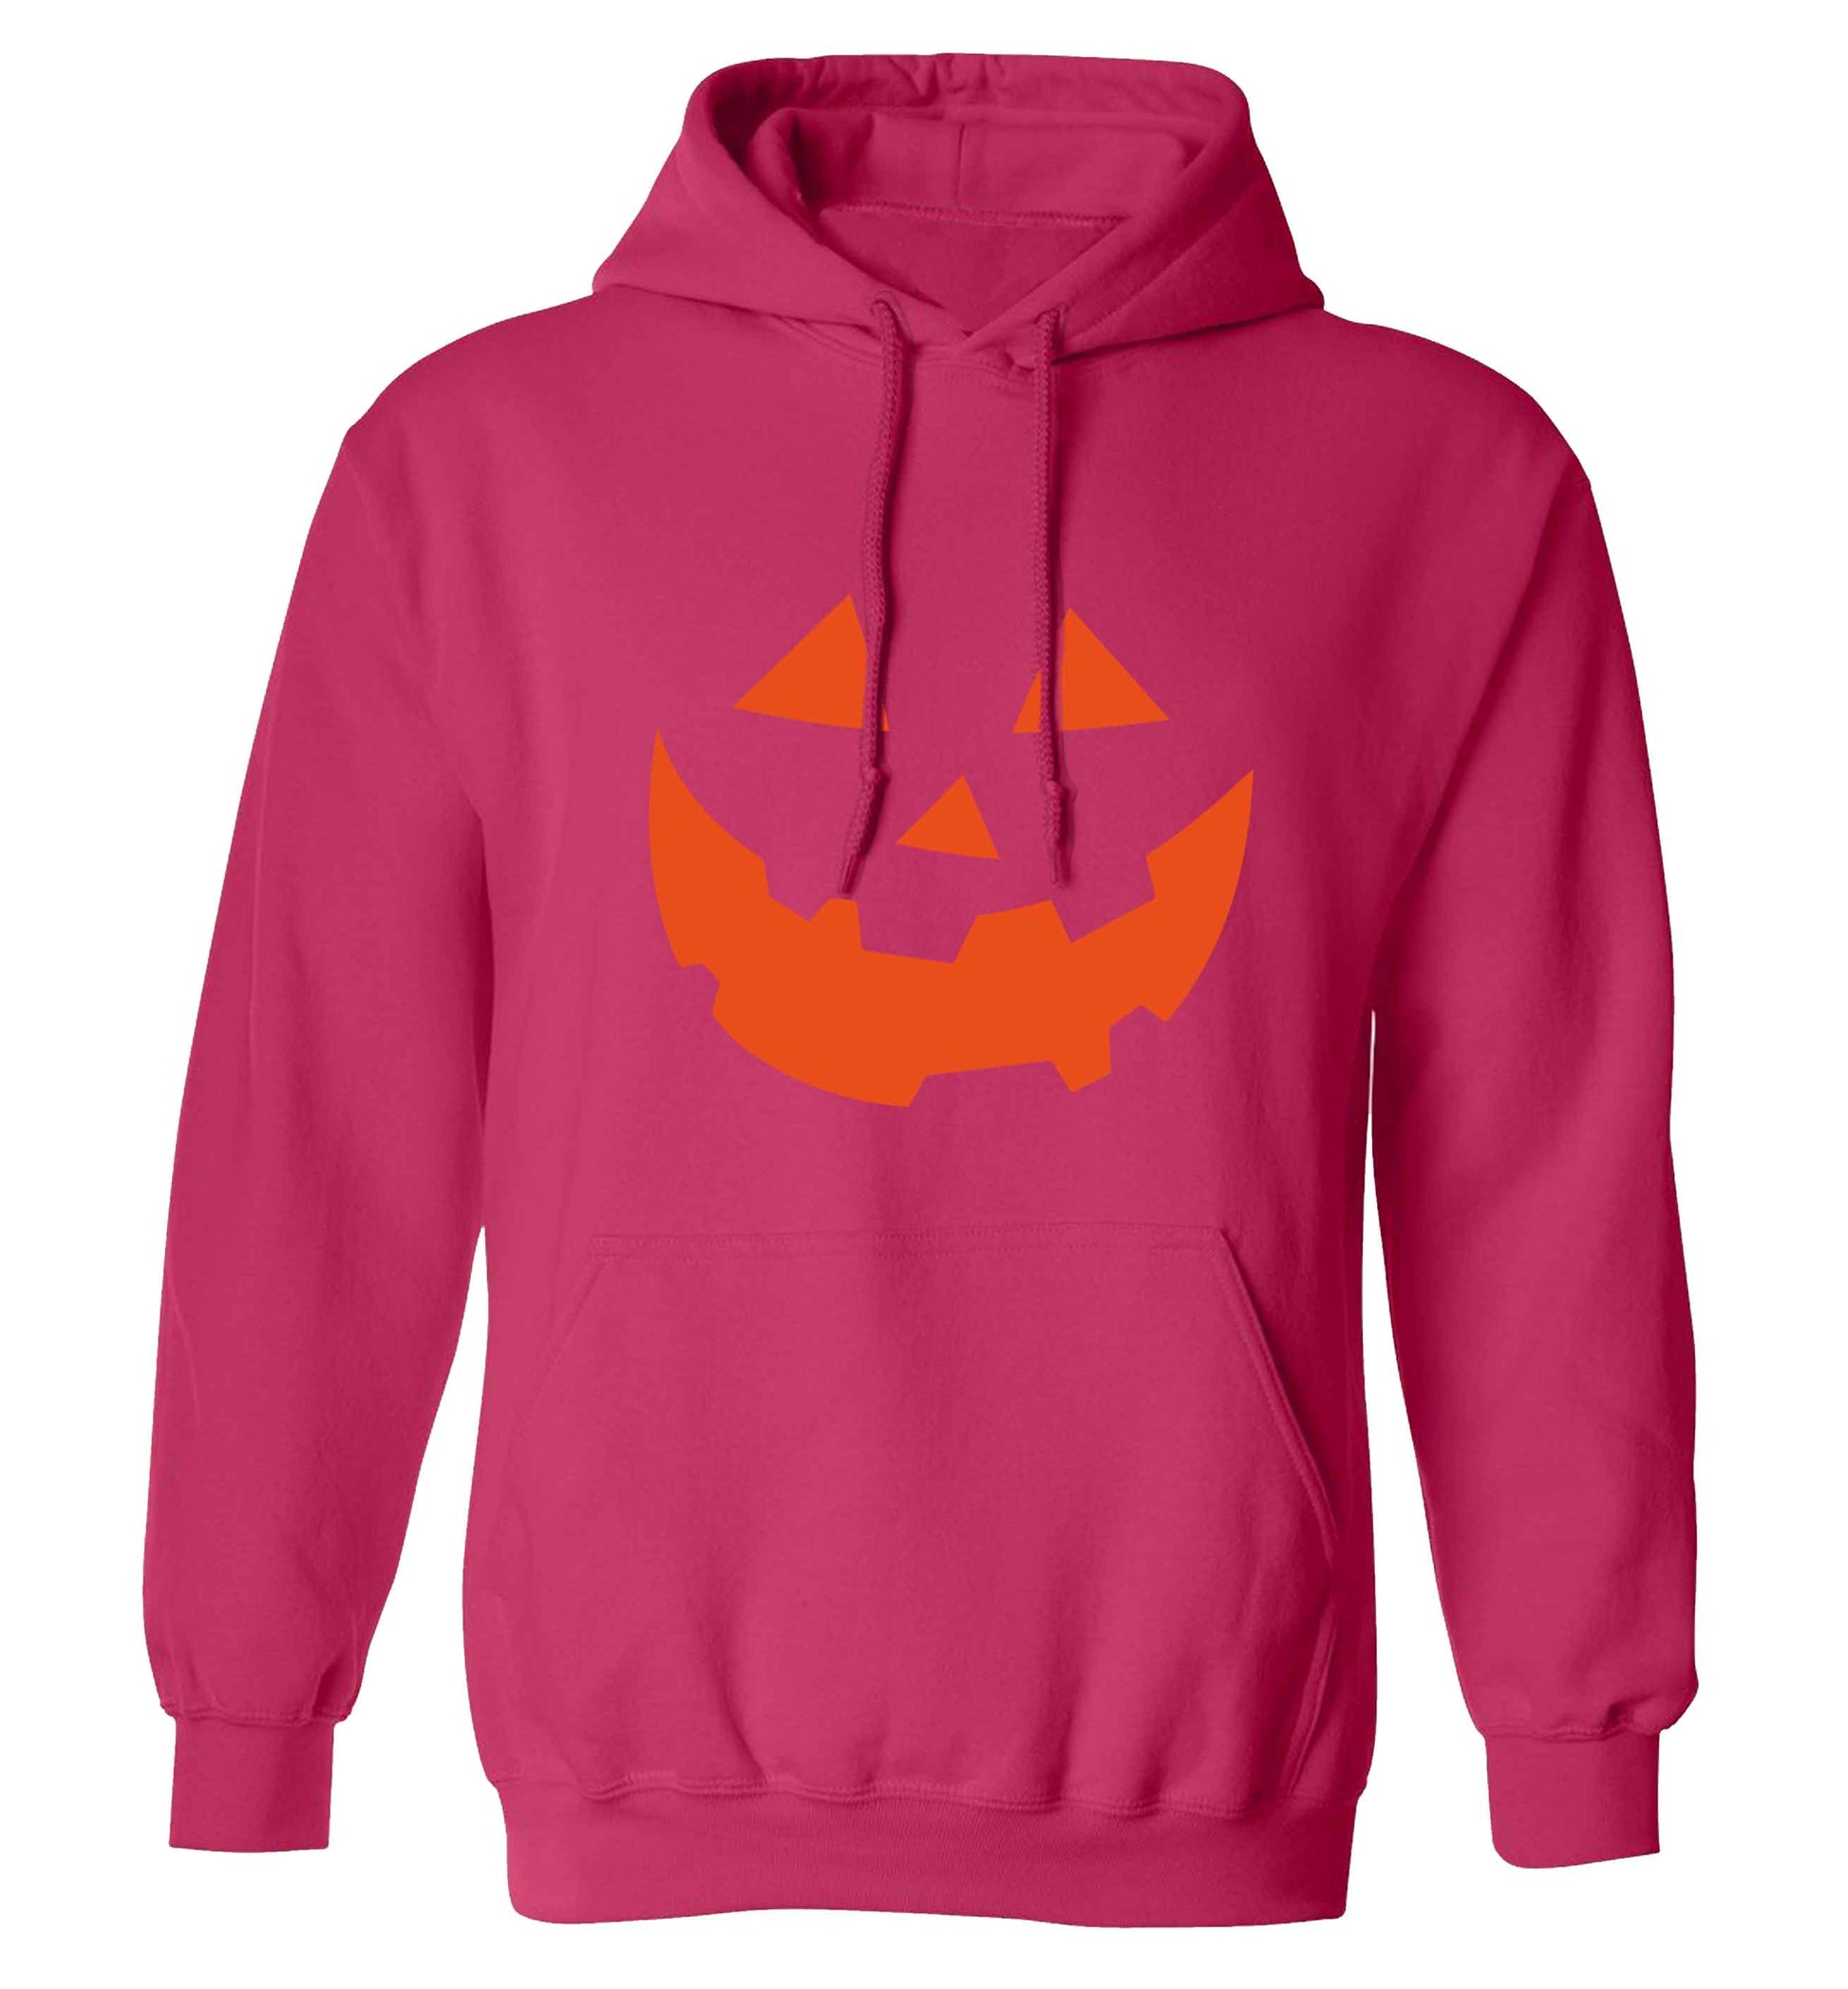 Pumpkin Spice Nice adults unisex pink hoodie 2XL